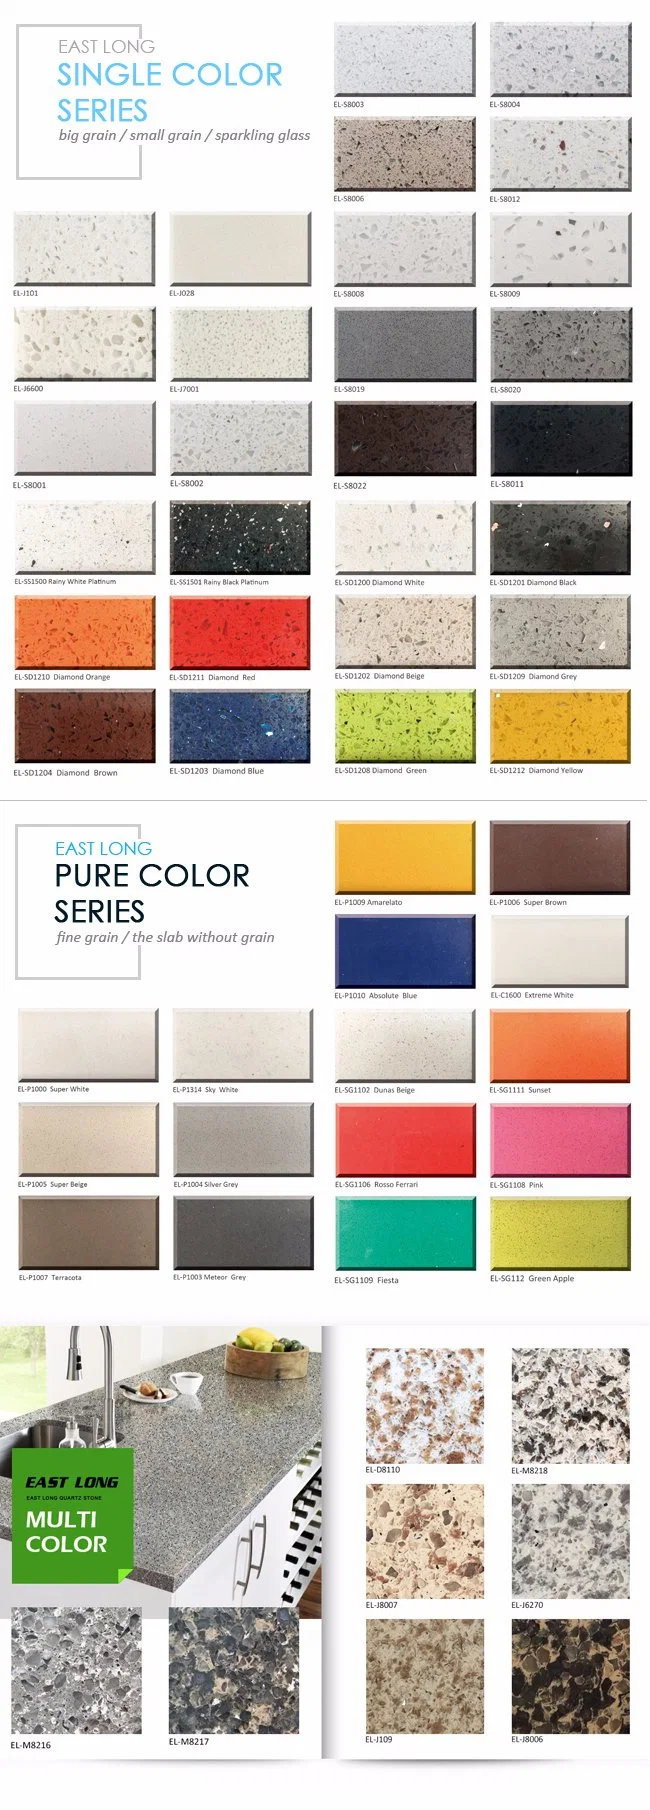 Cut-to-Size Pure Color Quartz Stone Slabs Export